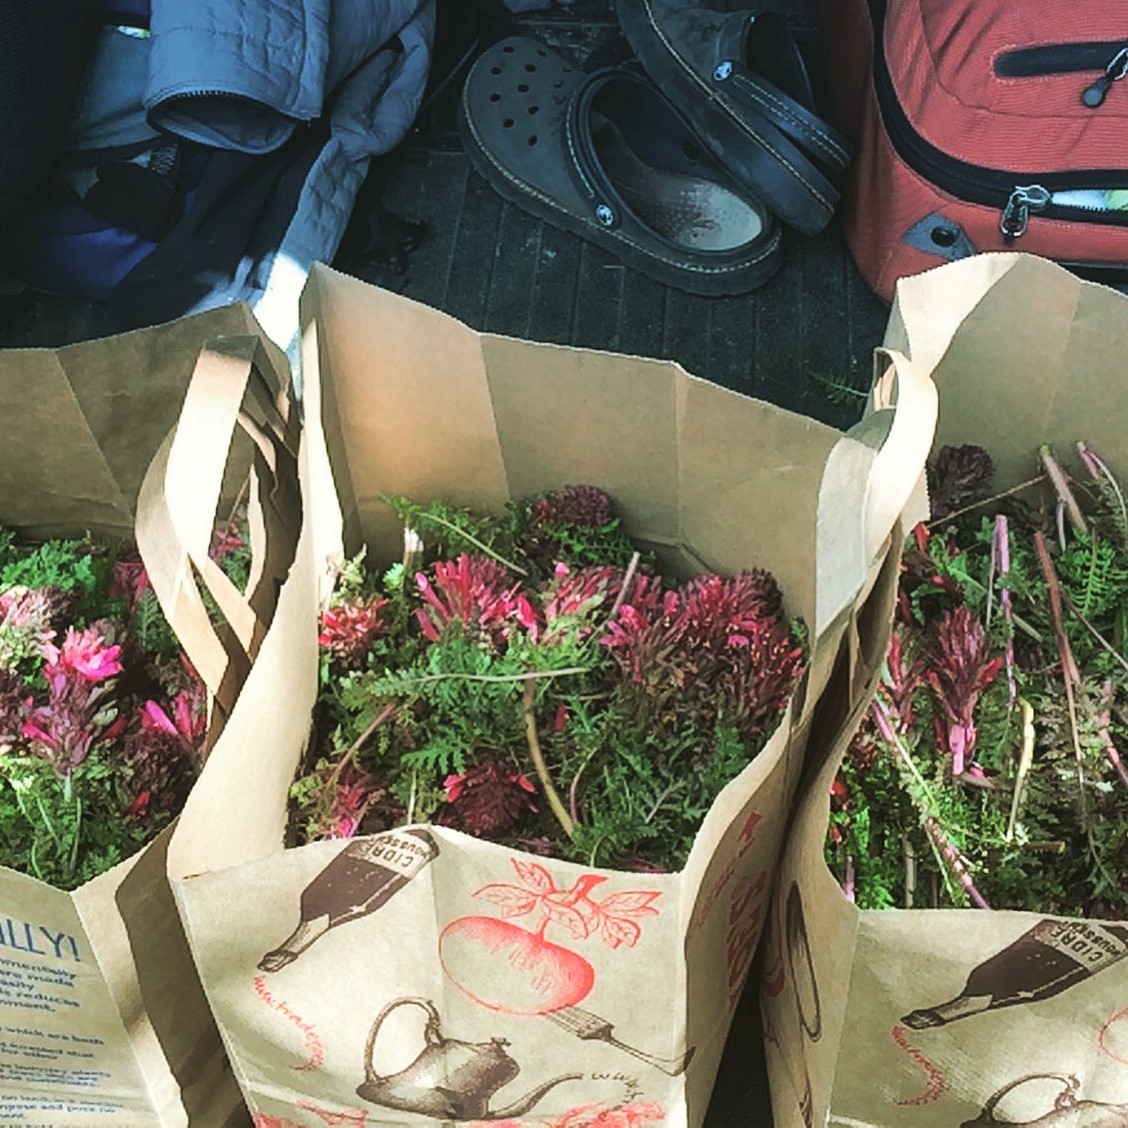 three-brown-paper-bags-of-wild-harvested-pink-flowering-pedicularis-lousewort-indian-warrior-plants-with-harvesting-gear-behind